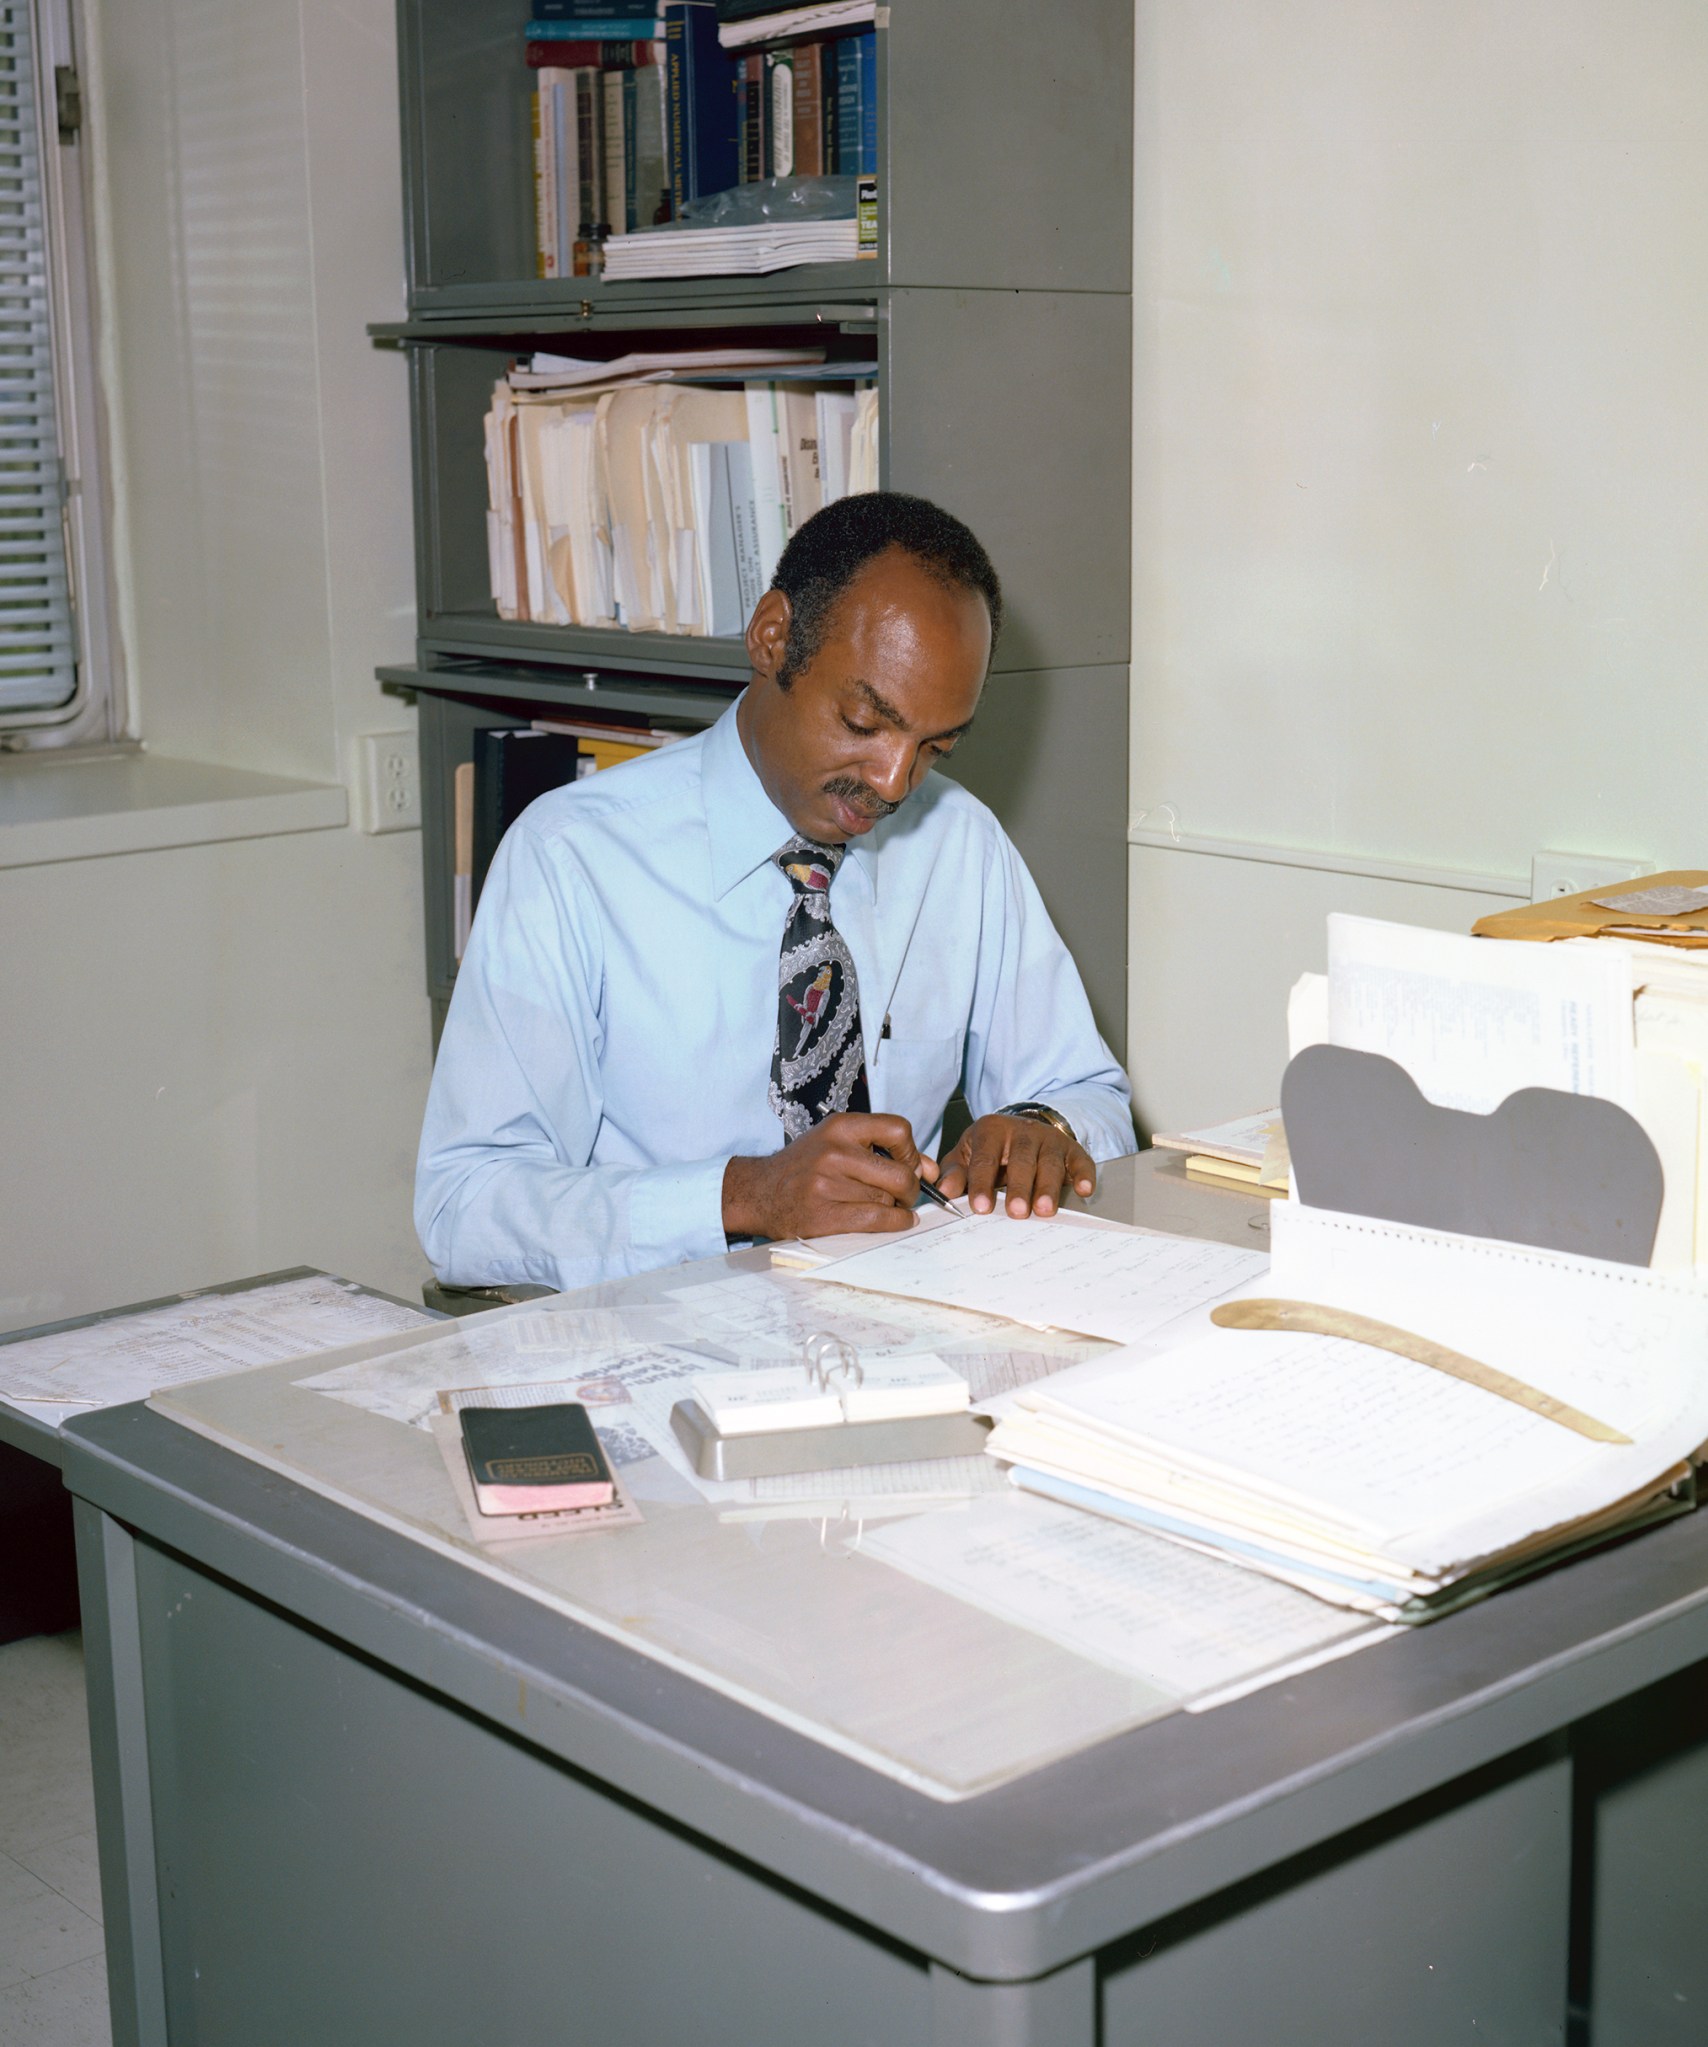 Man working at desk.